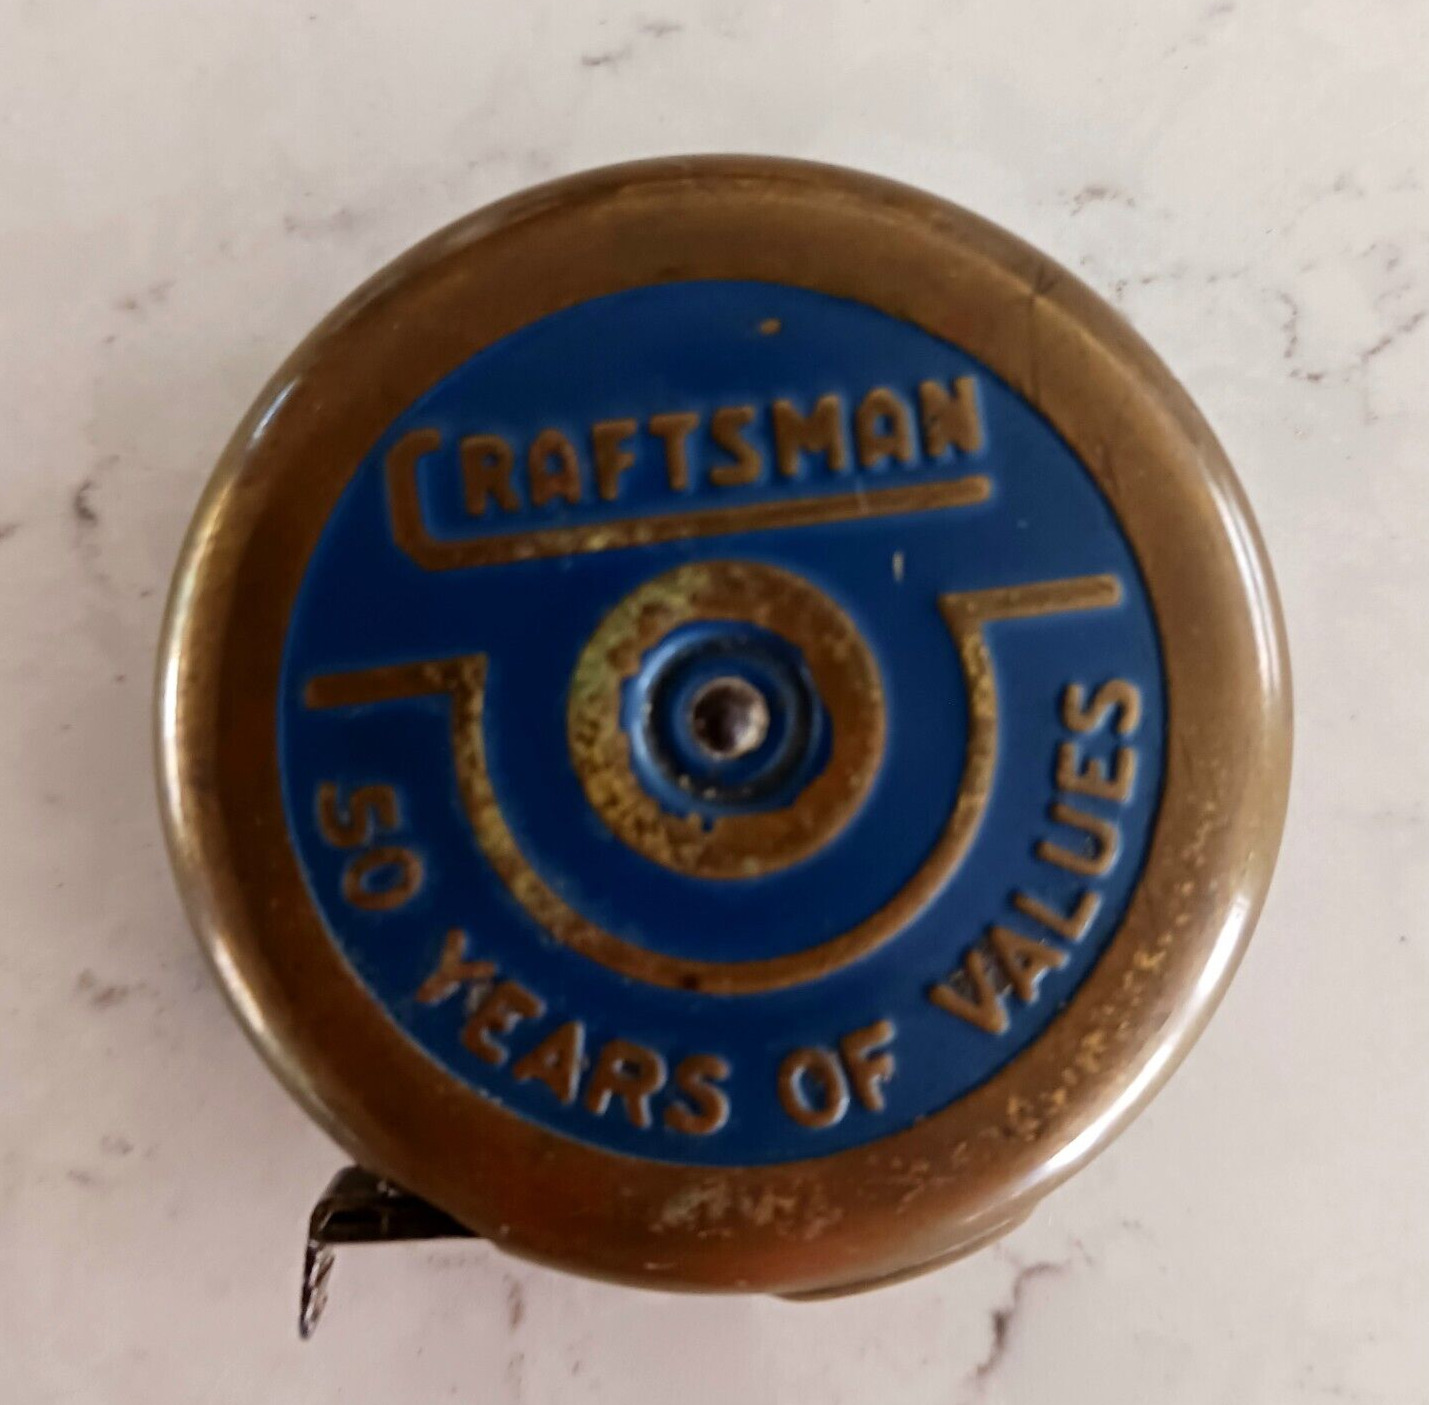 Antique 1936 Craftsman 1886-1936 50 Years “Golden Rule” 6’ Tape Measure RARE